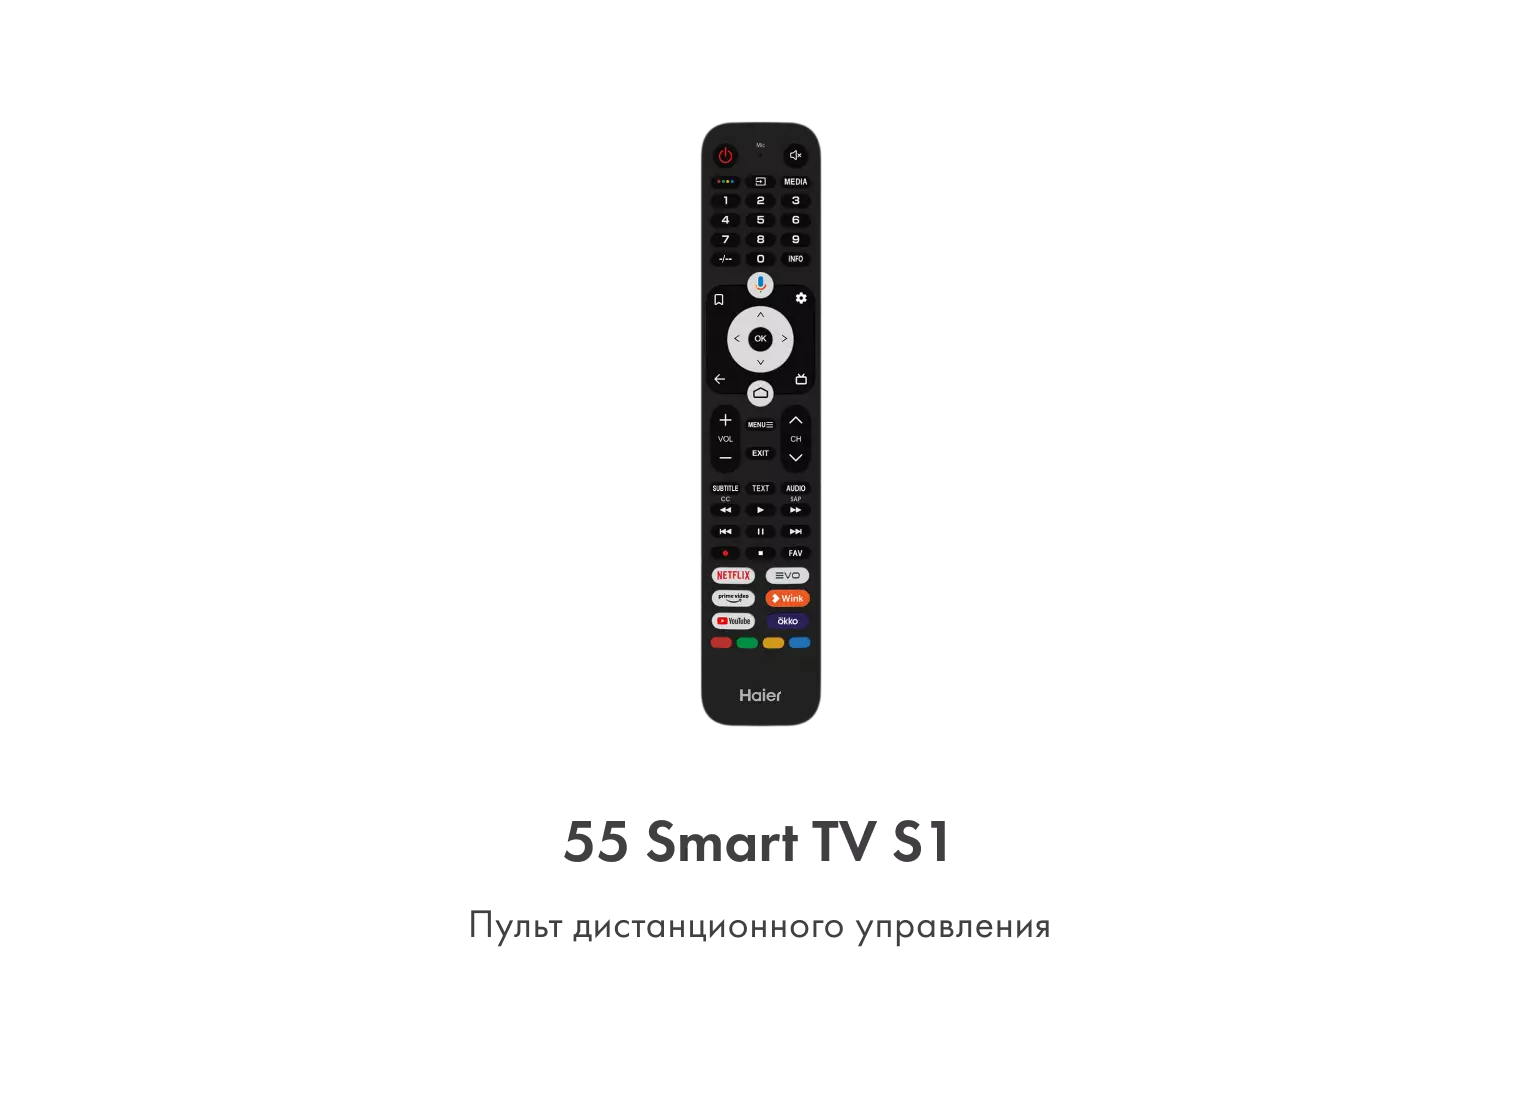 Телевизор Haier 55 Smart TV S1